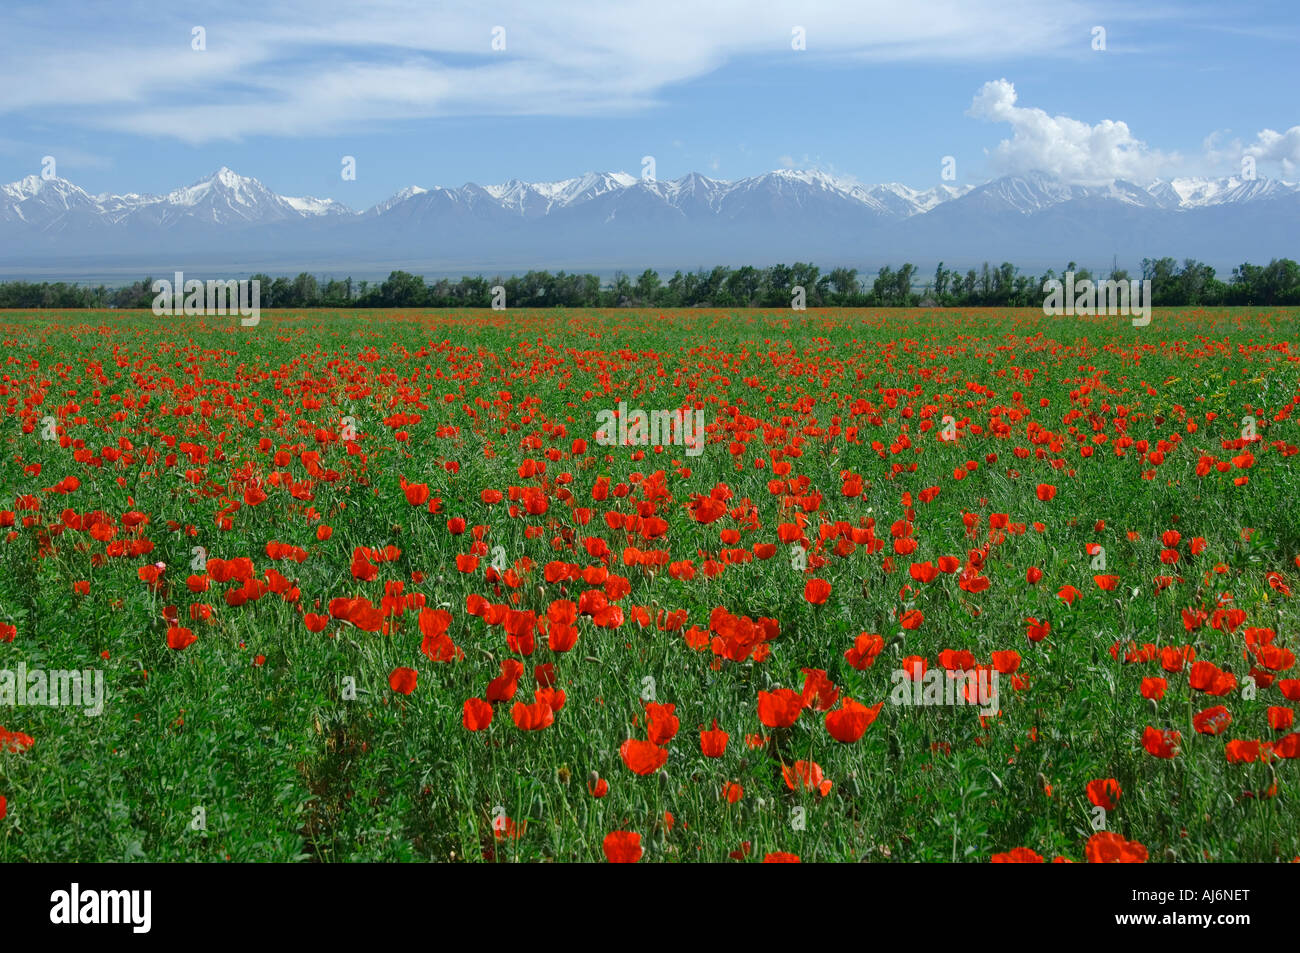 Field of red poppies Kazakhstan Stock Photo - Alamy